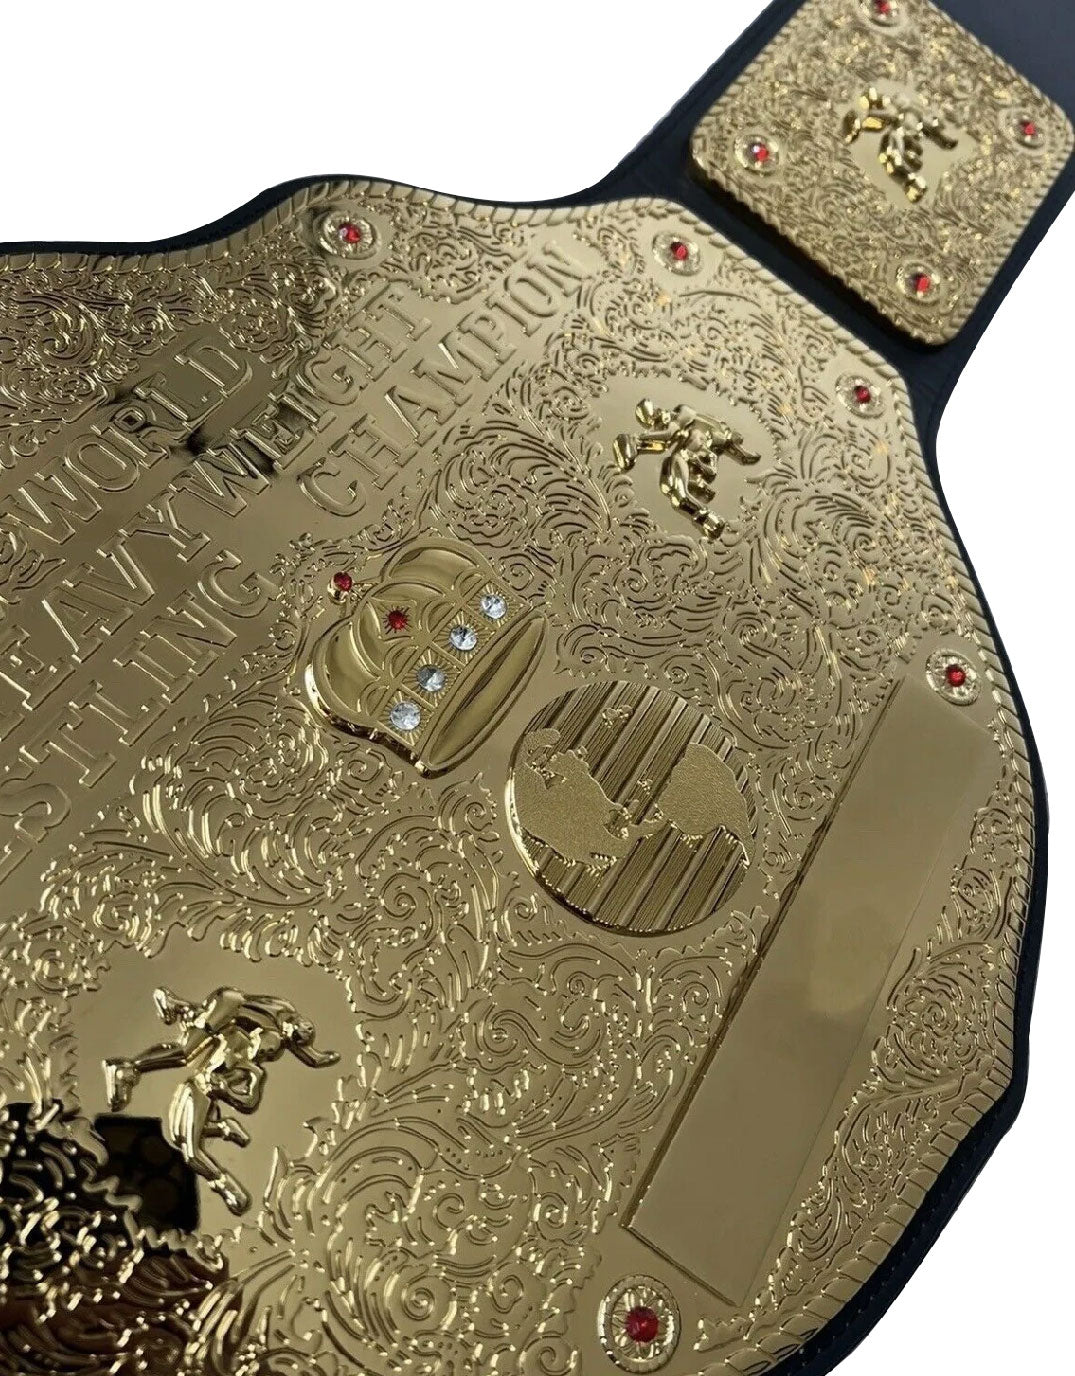 TRUESAGA - Big Gold Wrestling Championship Belt Class One Replica - Adult Waist Size Up to 46" - 2mm Metal Plate Genuine Leather Base